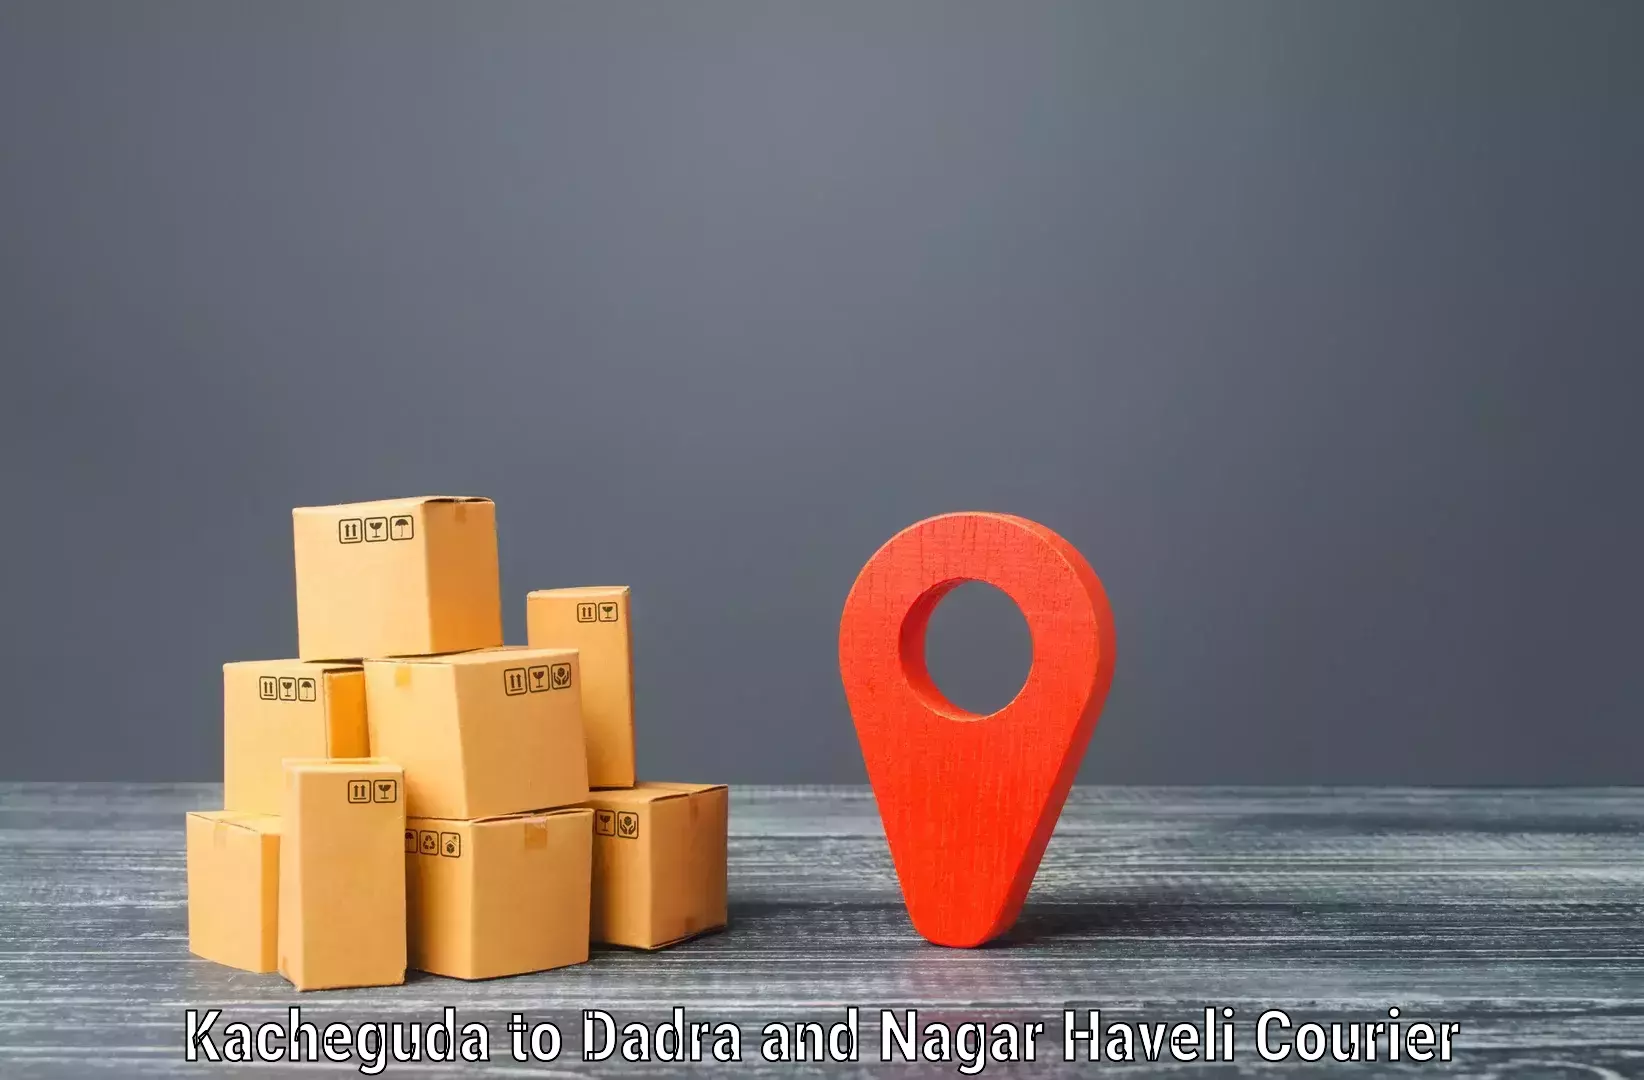 Logistics service provider Kacheguda to Dadra and Nagar Haveli